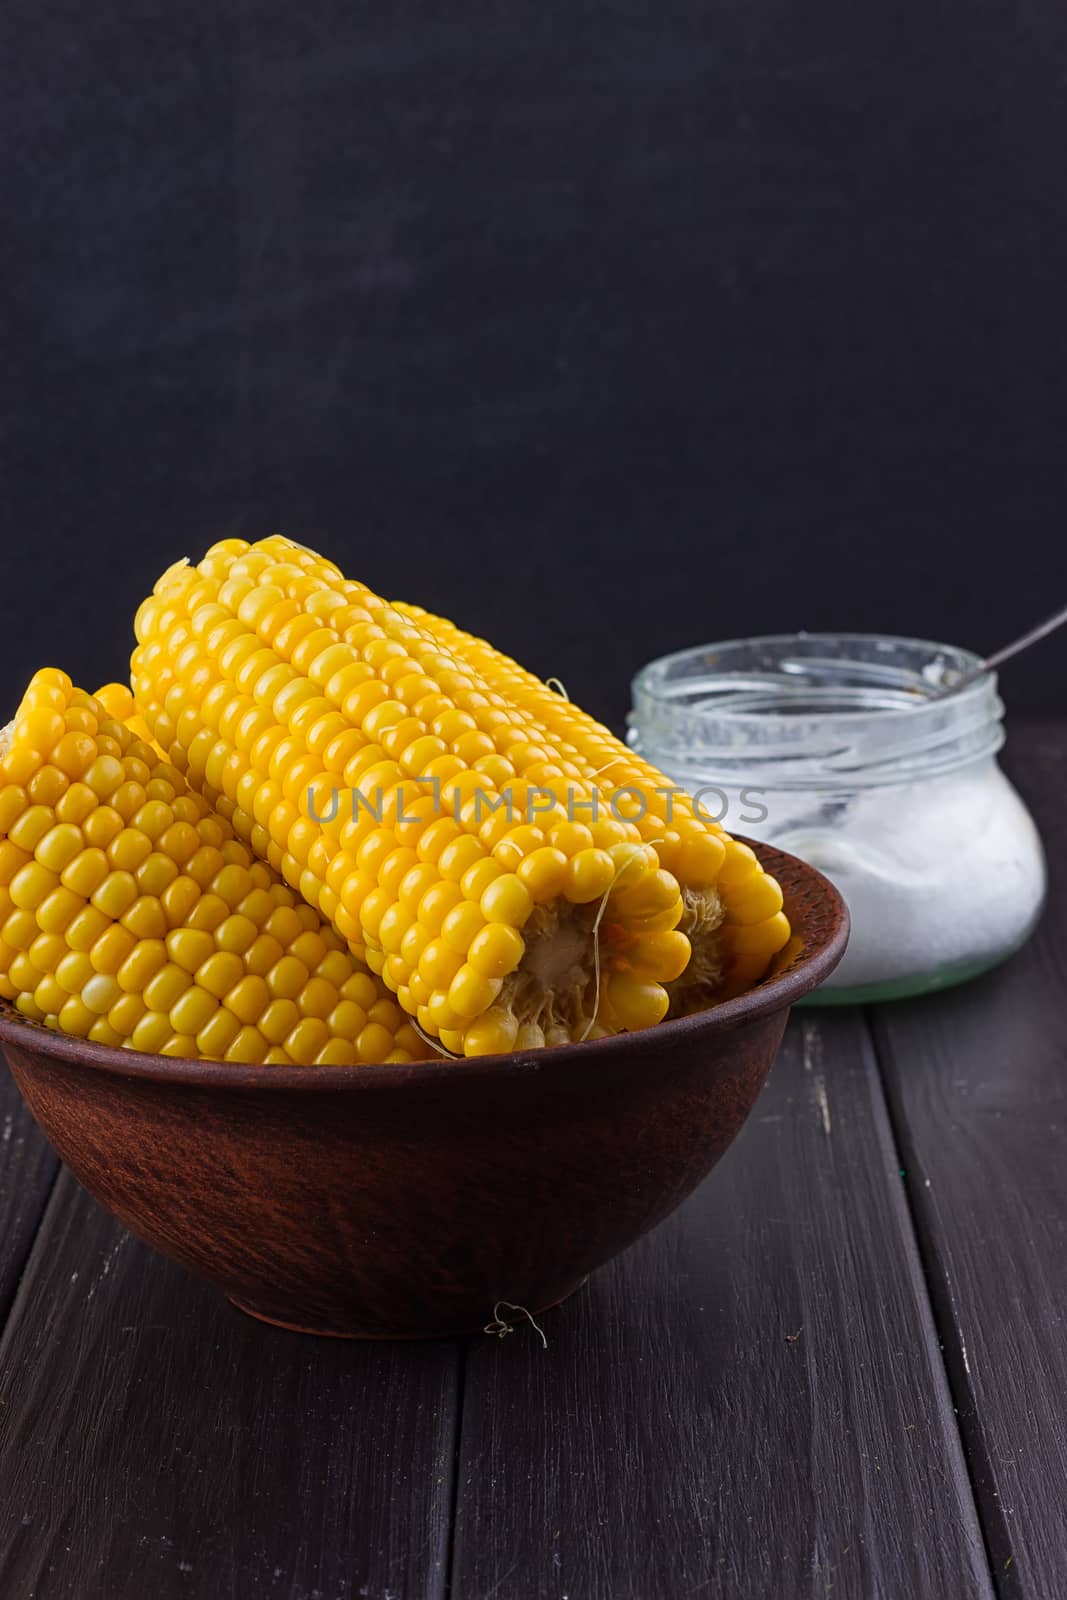 Homemade golden corn cob by victosha